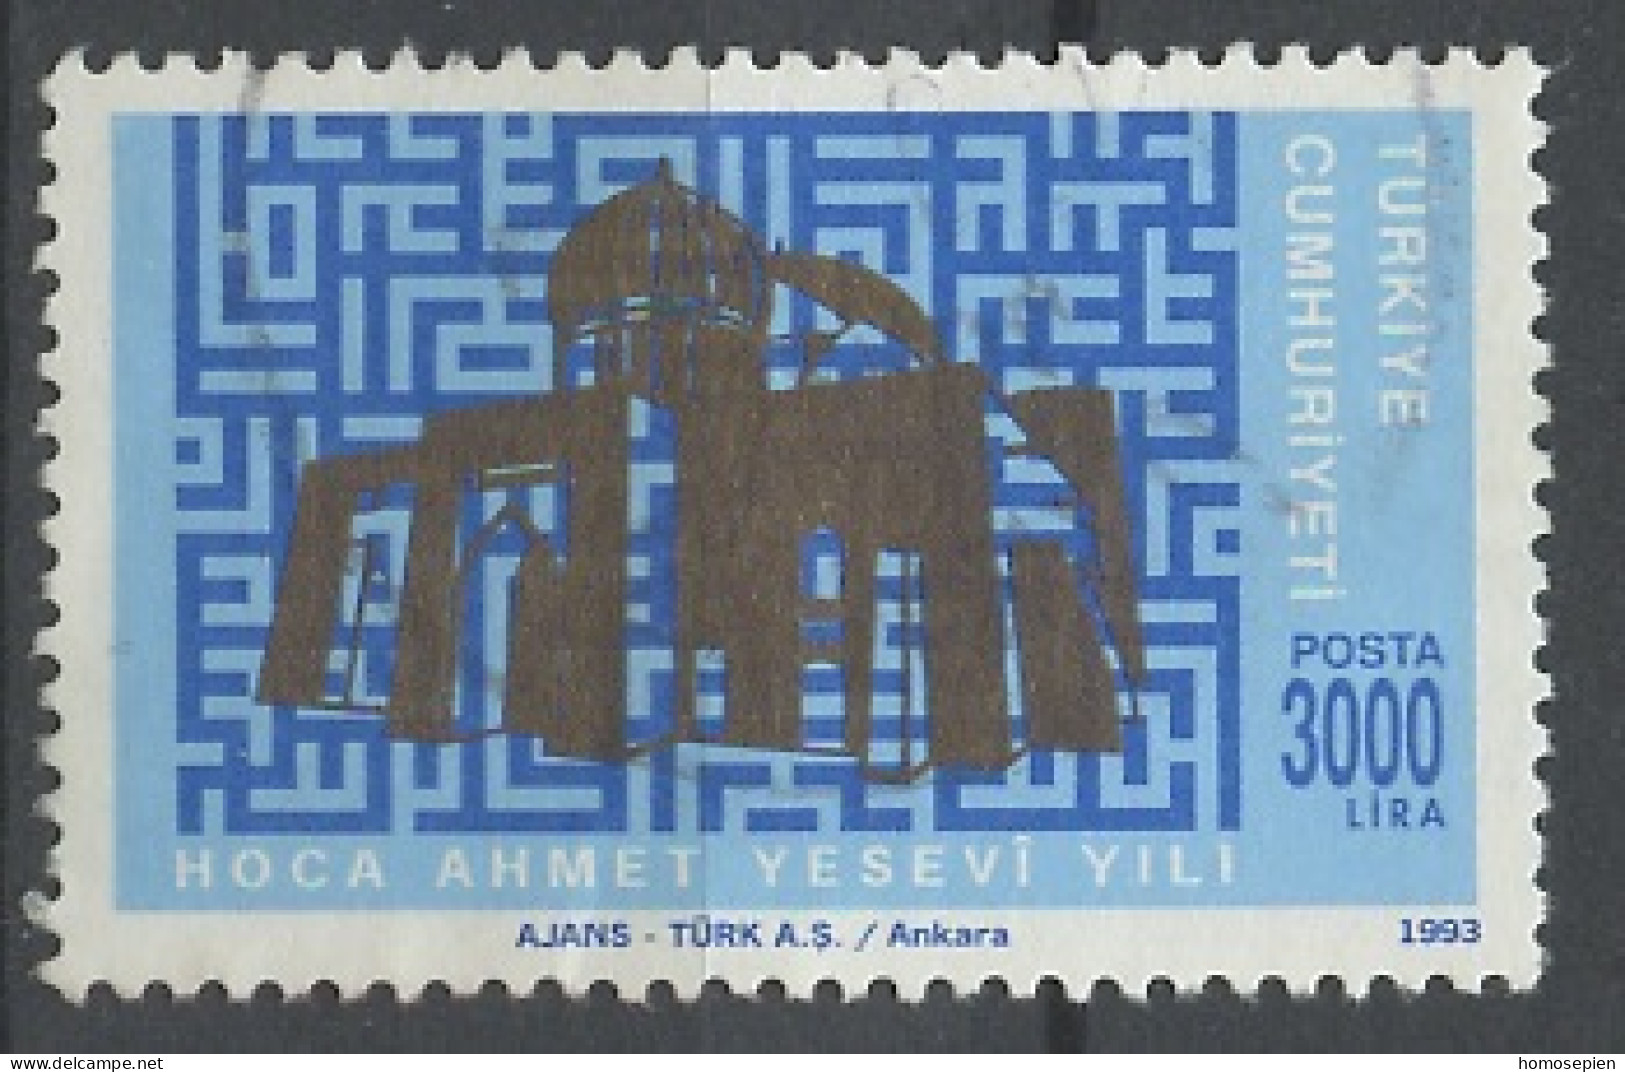 Turquie - Türkei - Turkey 1993 Y&T N°2741 - Michel N°2993 (o) - 3000l H A Yesevi - Used Stamps